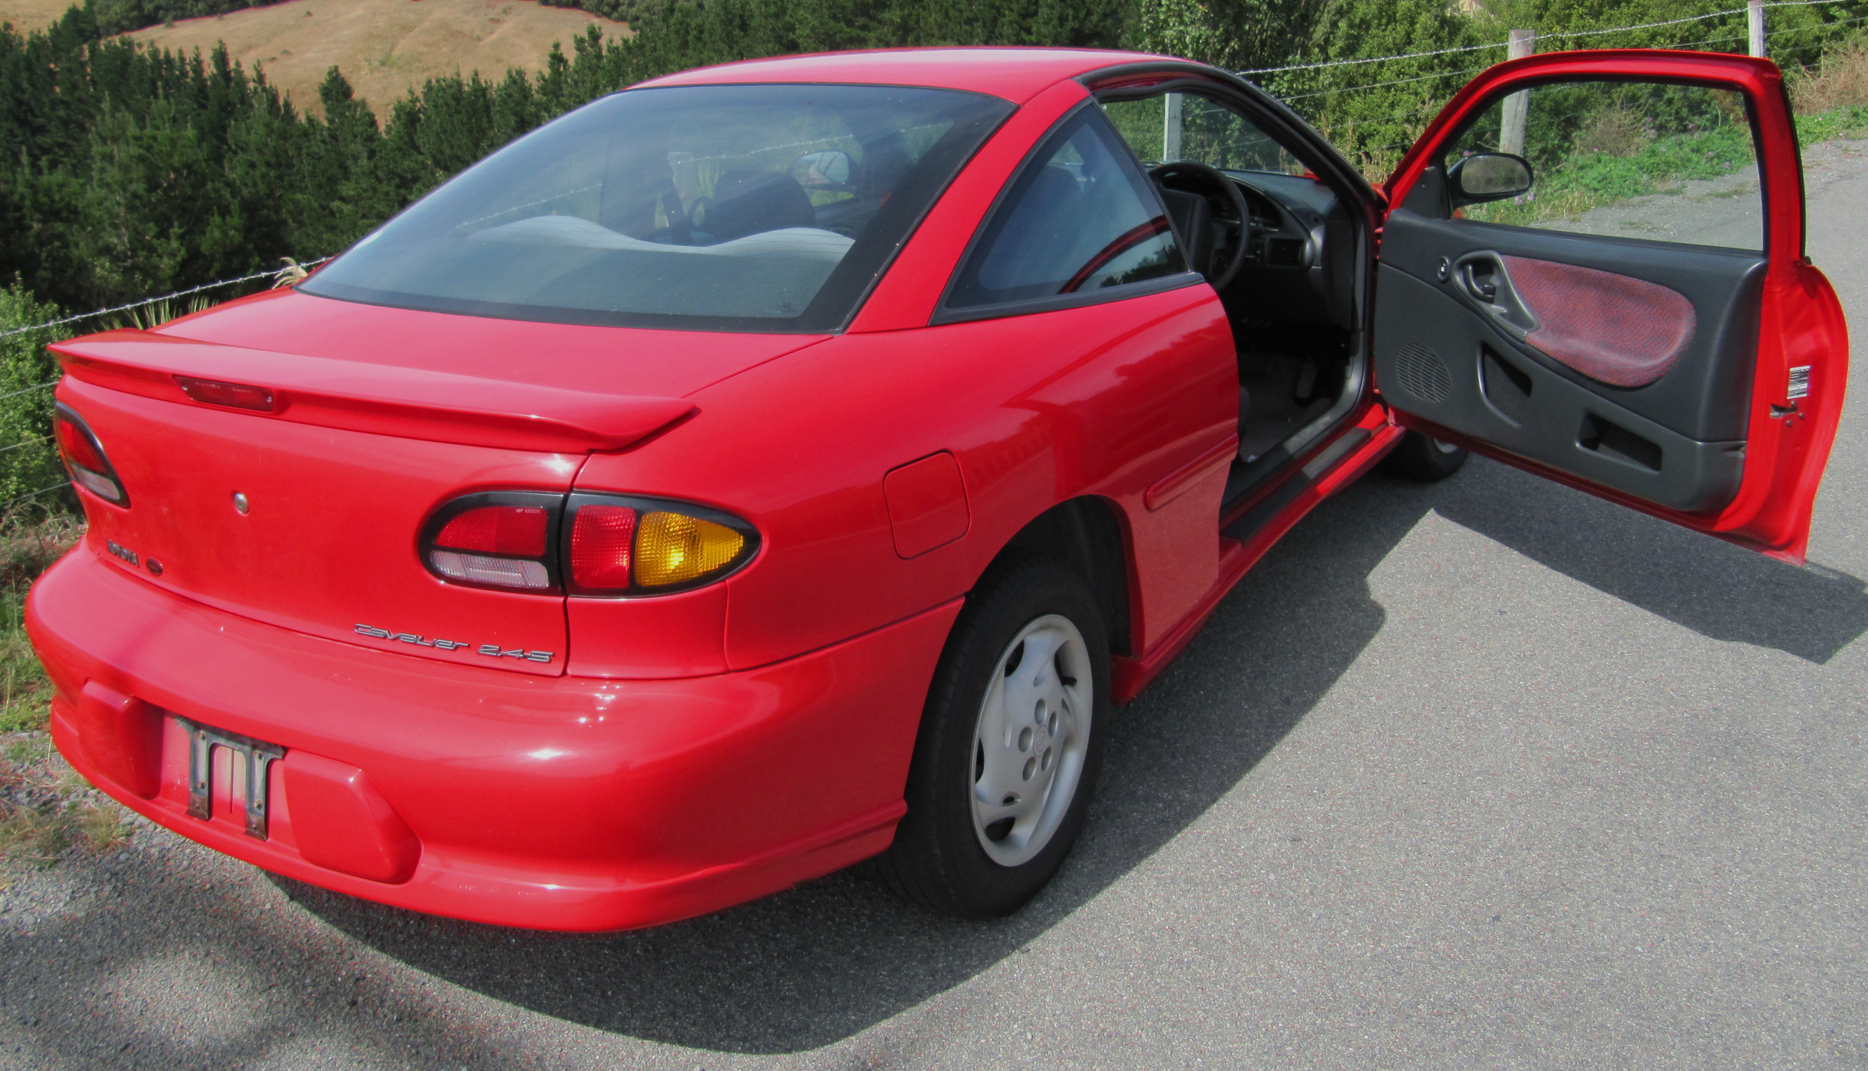  1996-2000 Chevrolet Cavalier coupe 